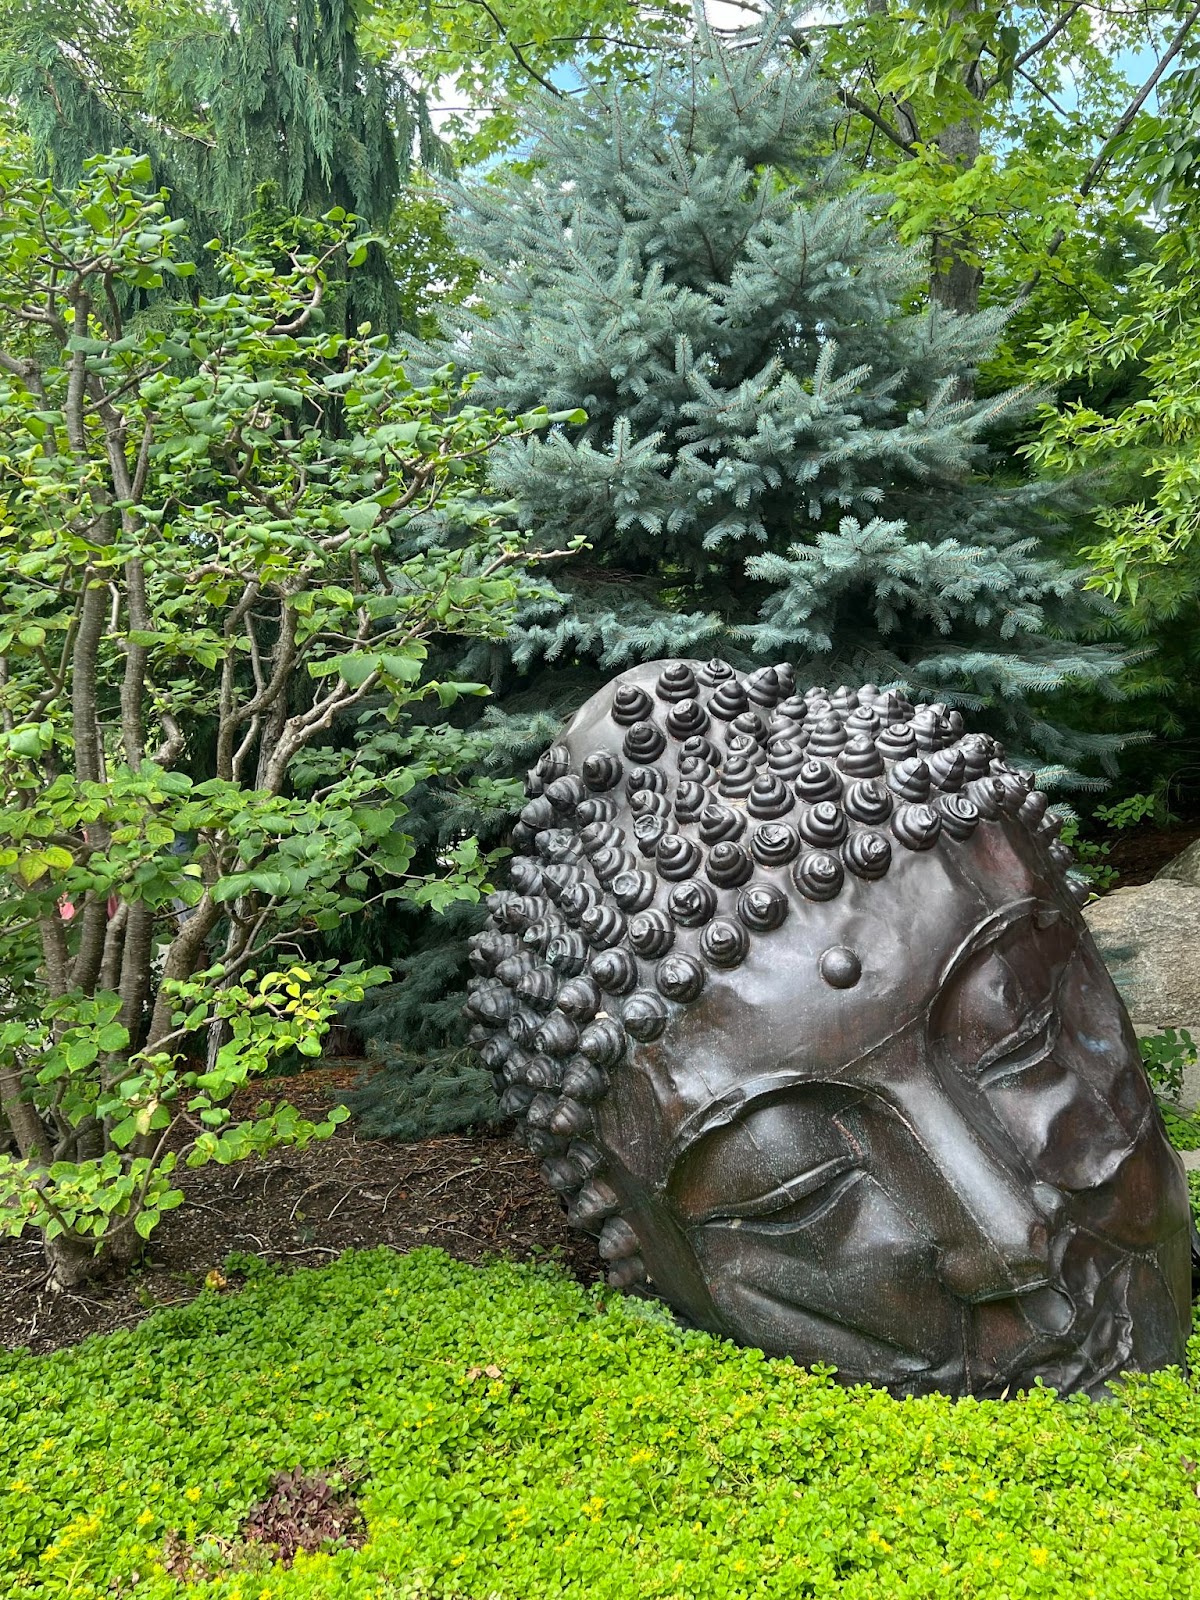 Mariya Tiama's photo of the Meijer Gardens in Grand Rapids, Michigan.